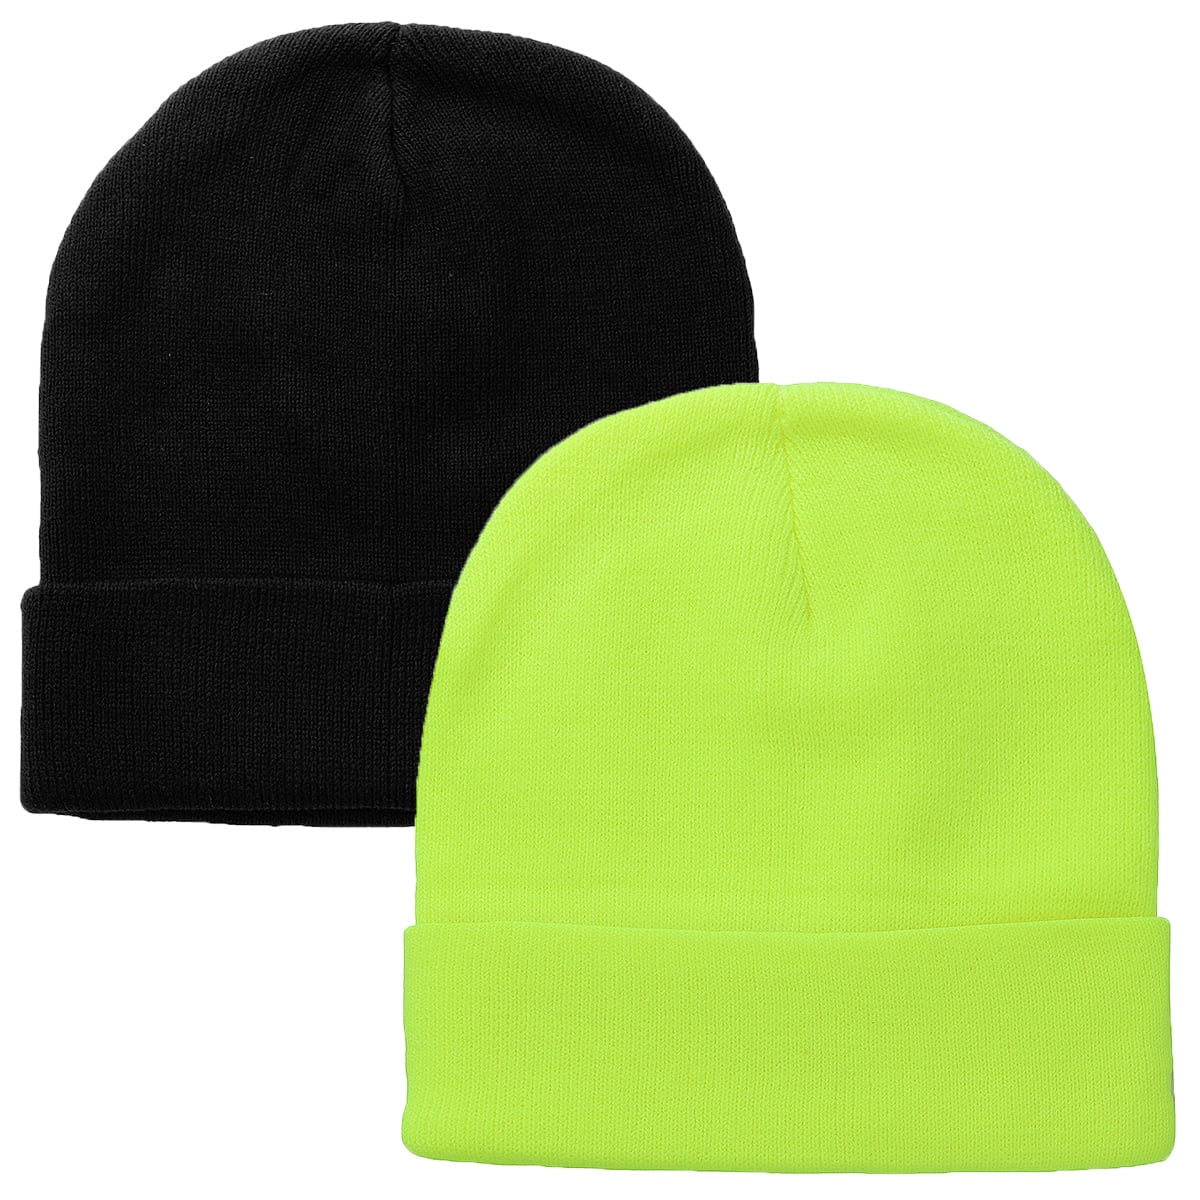 Neon Green Beanie Plain Knit Ski Hat Skull Cap Cuff Warm Winter Blank Unisex New 